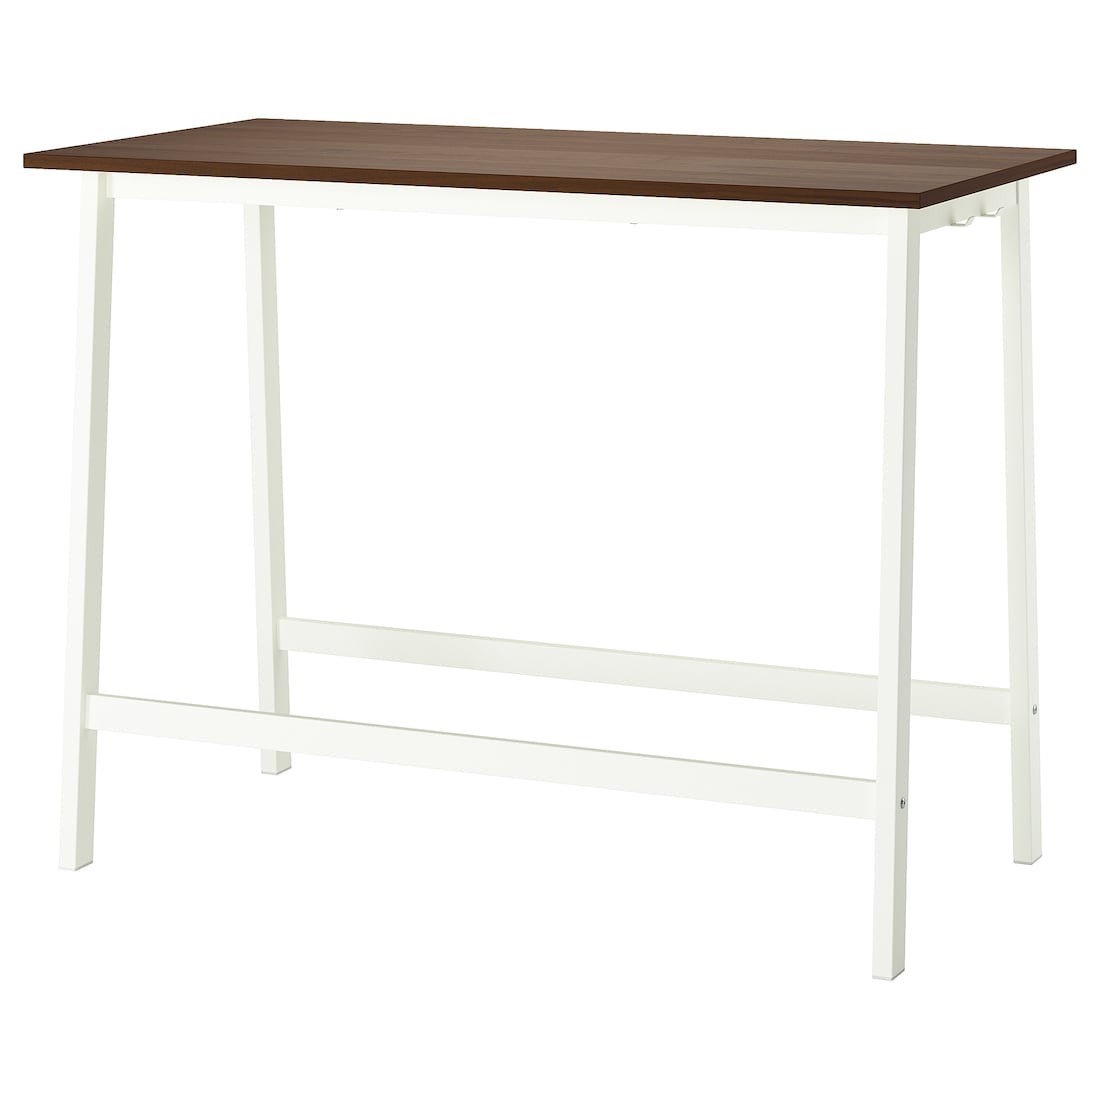 MITTZON конференц-стол, орех / белый, 140x68x105 см